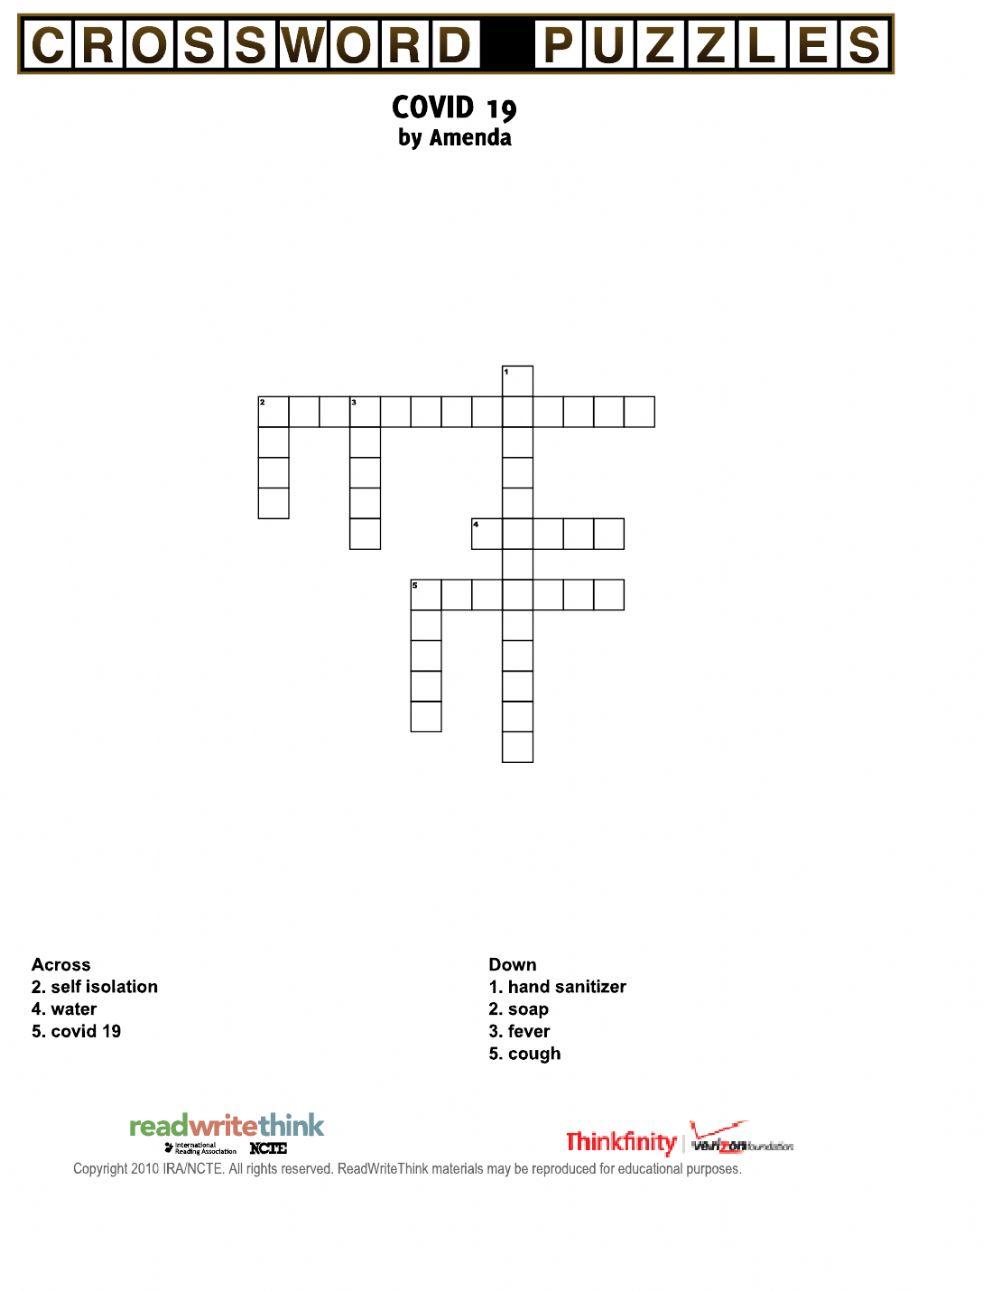 COVID 19 crossword